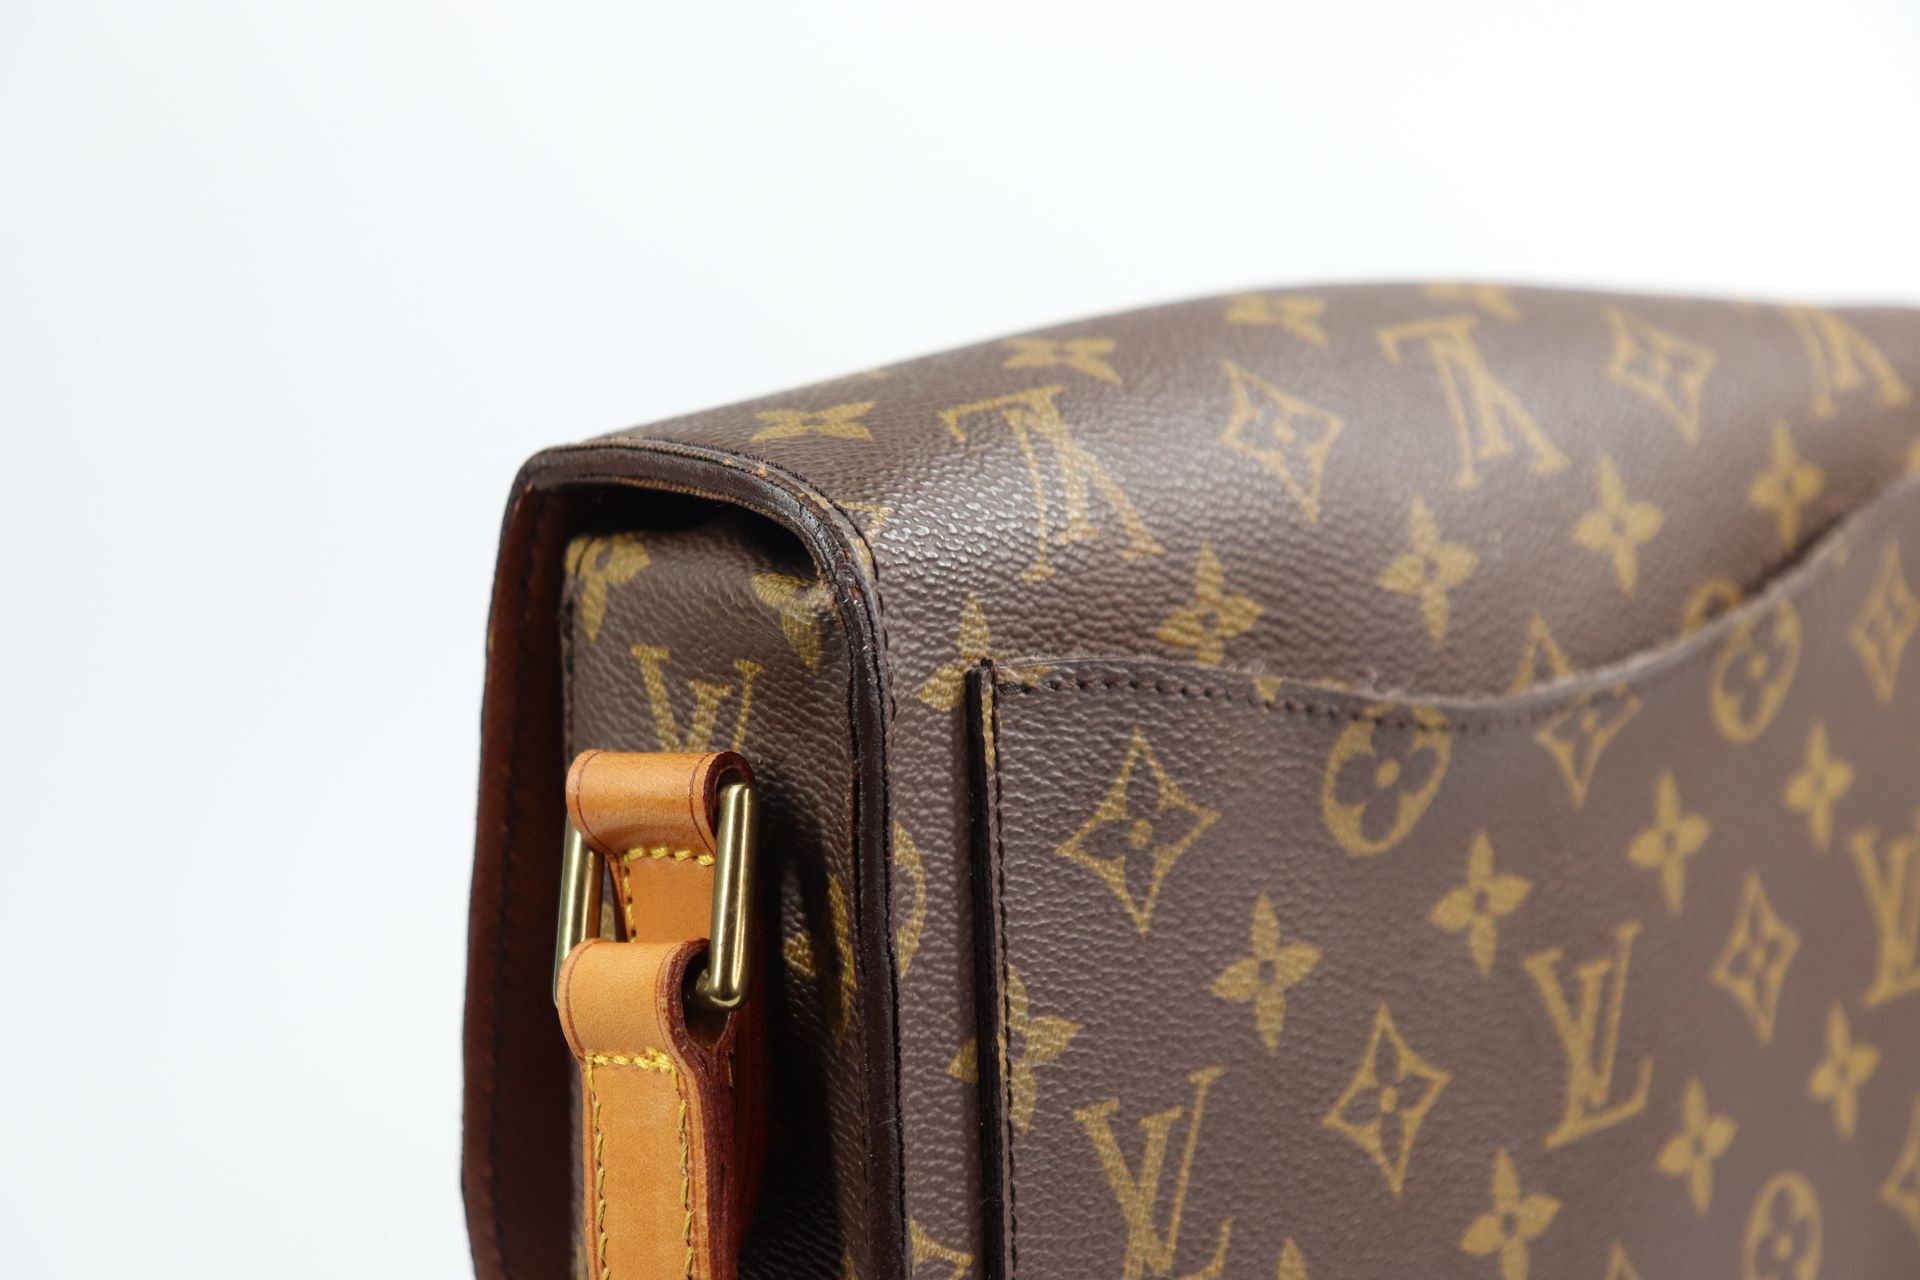 Louis Vuitton Monogram Saint Cloud GM Crossbody Bag 863468